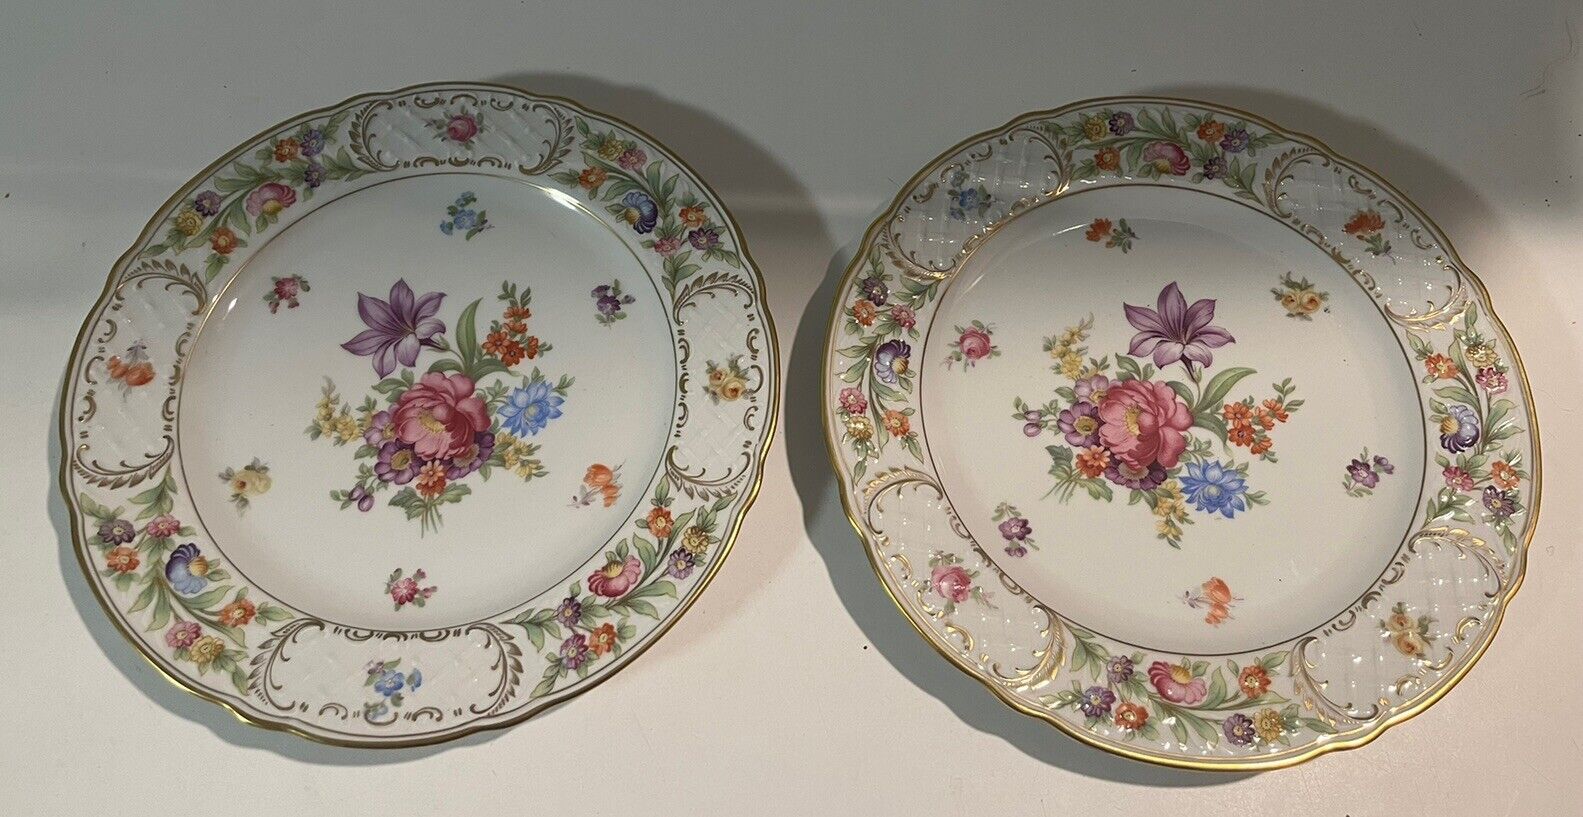 Schumann - Bavaria Empress Dresden Flowers Dinner Plates (2) 10 1/8” Germany